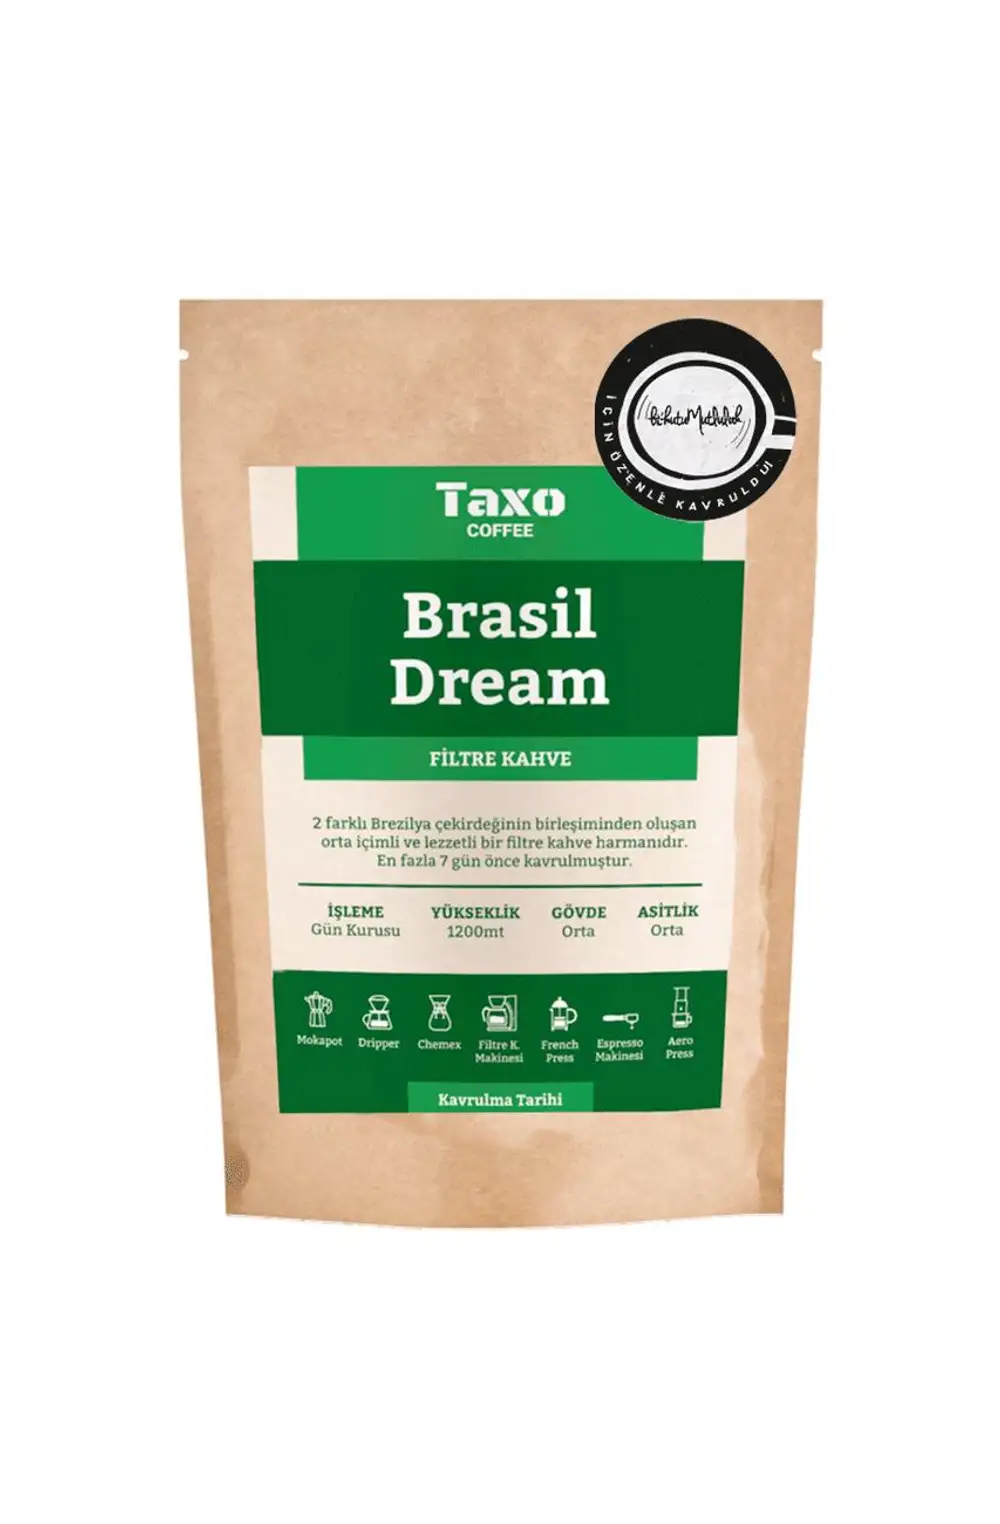 Filtre Kahve - Brasil Dream Taxo Coffee 50 gr.